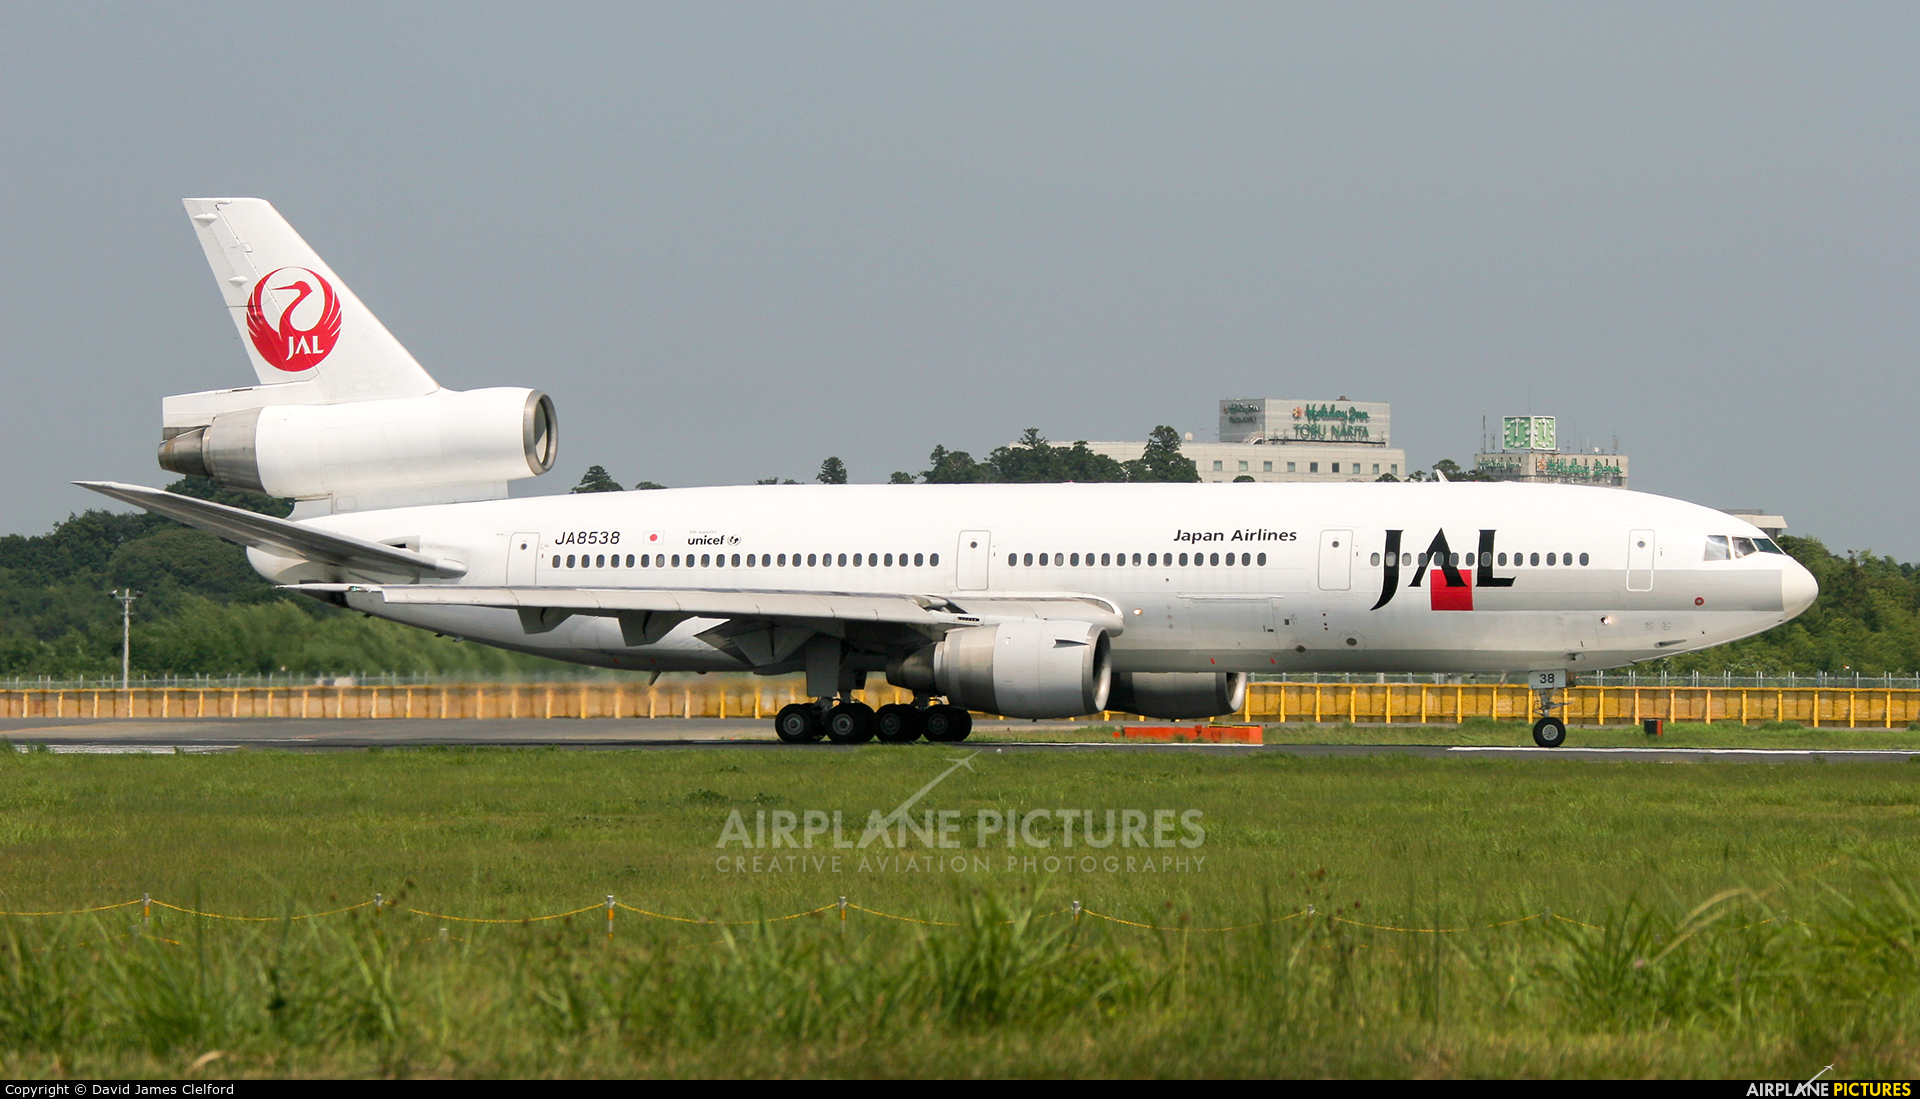 JA8538 - JAL - Japan Airlines McDonnell Douglas DC-10 at Tokyo - Narita